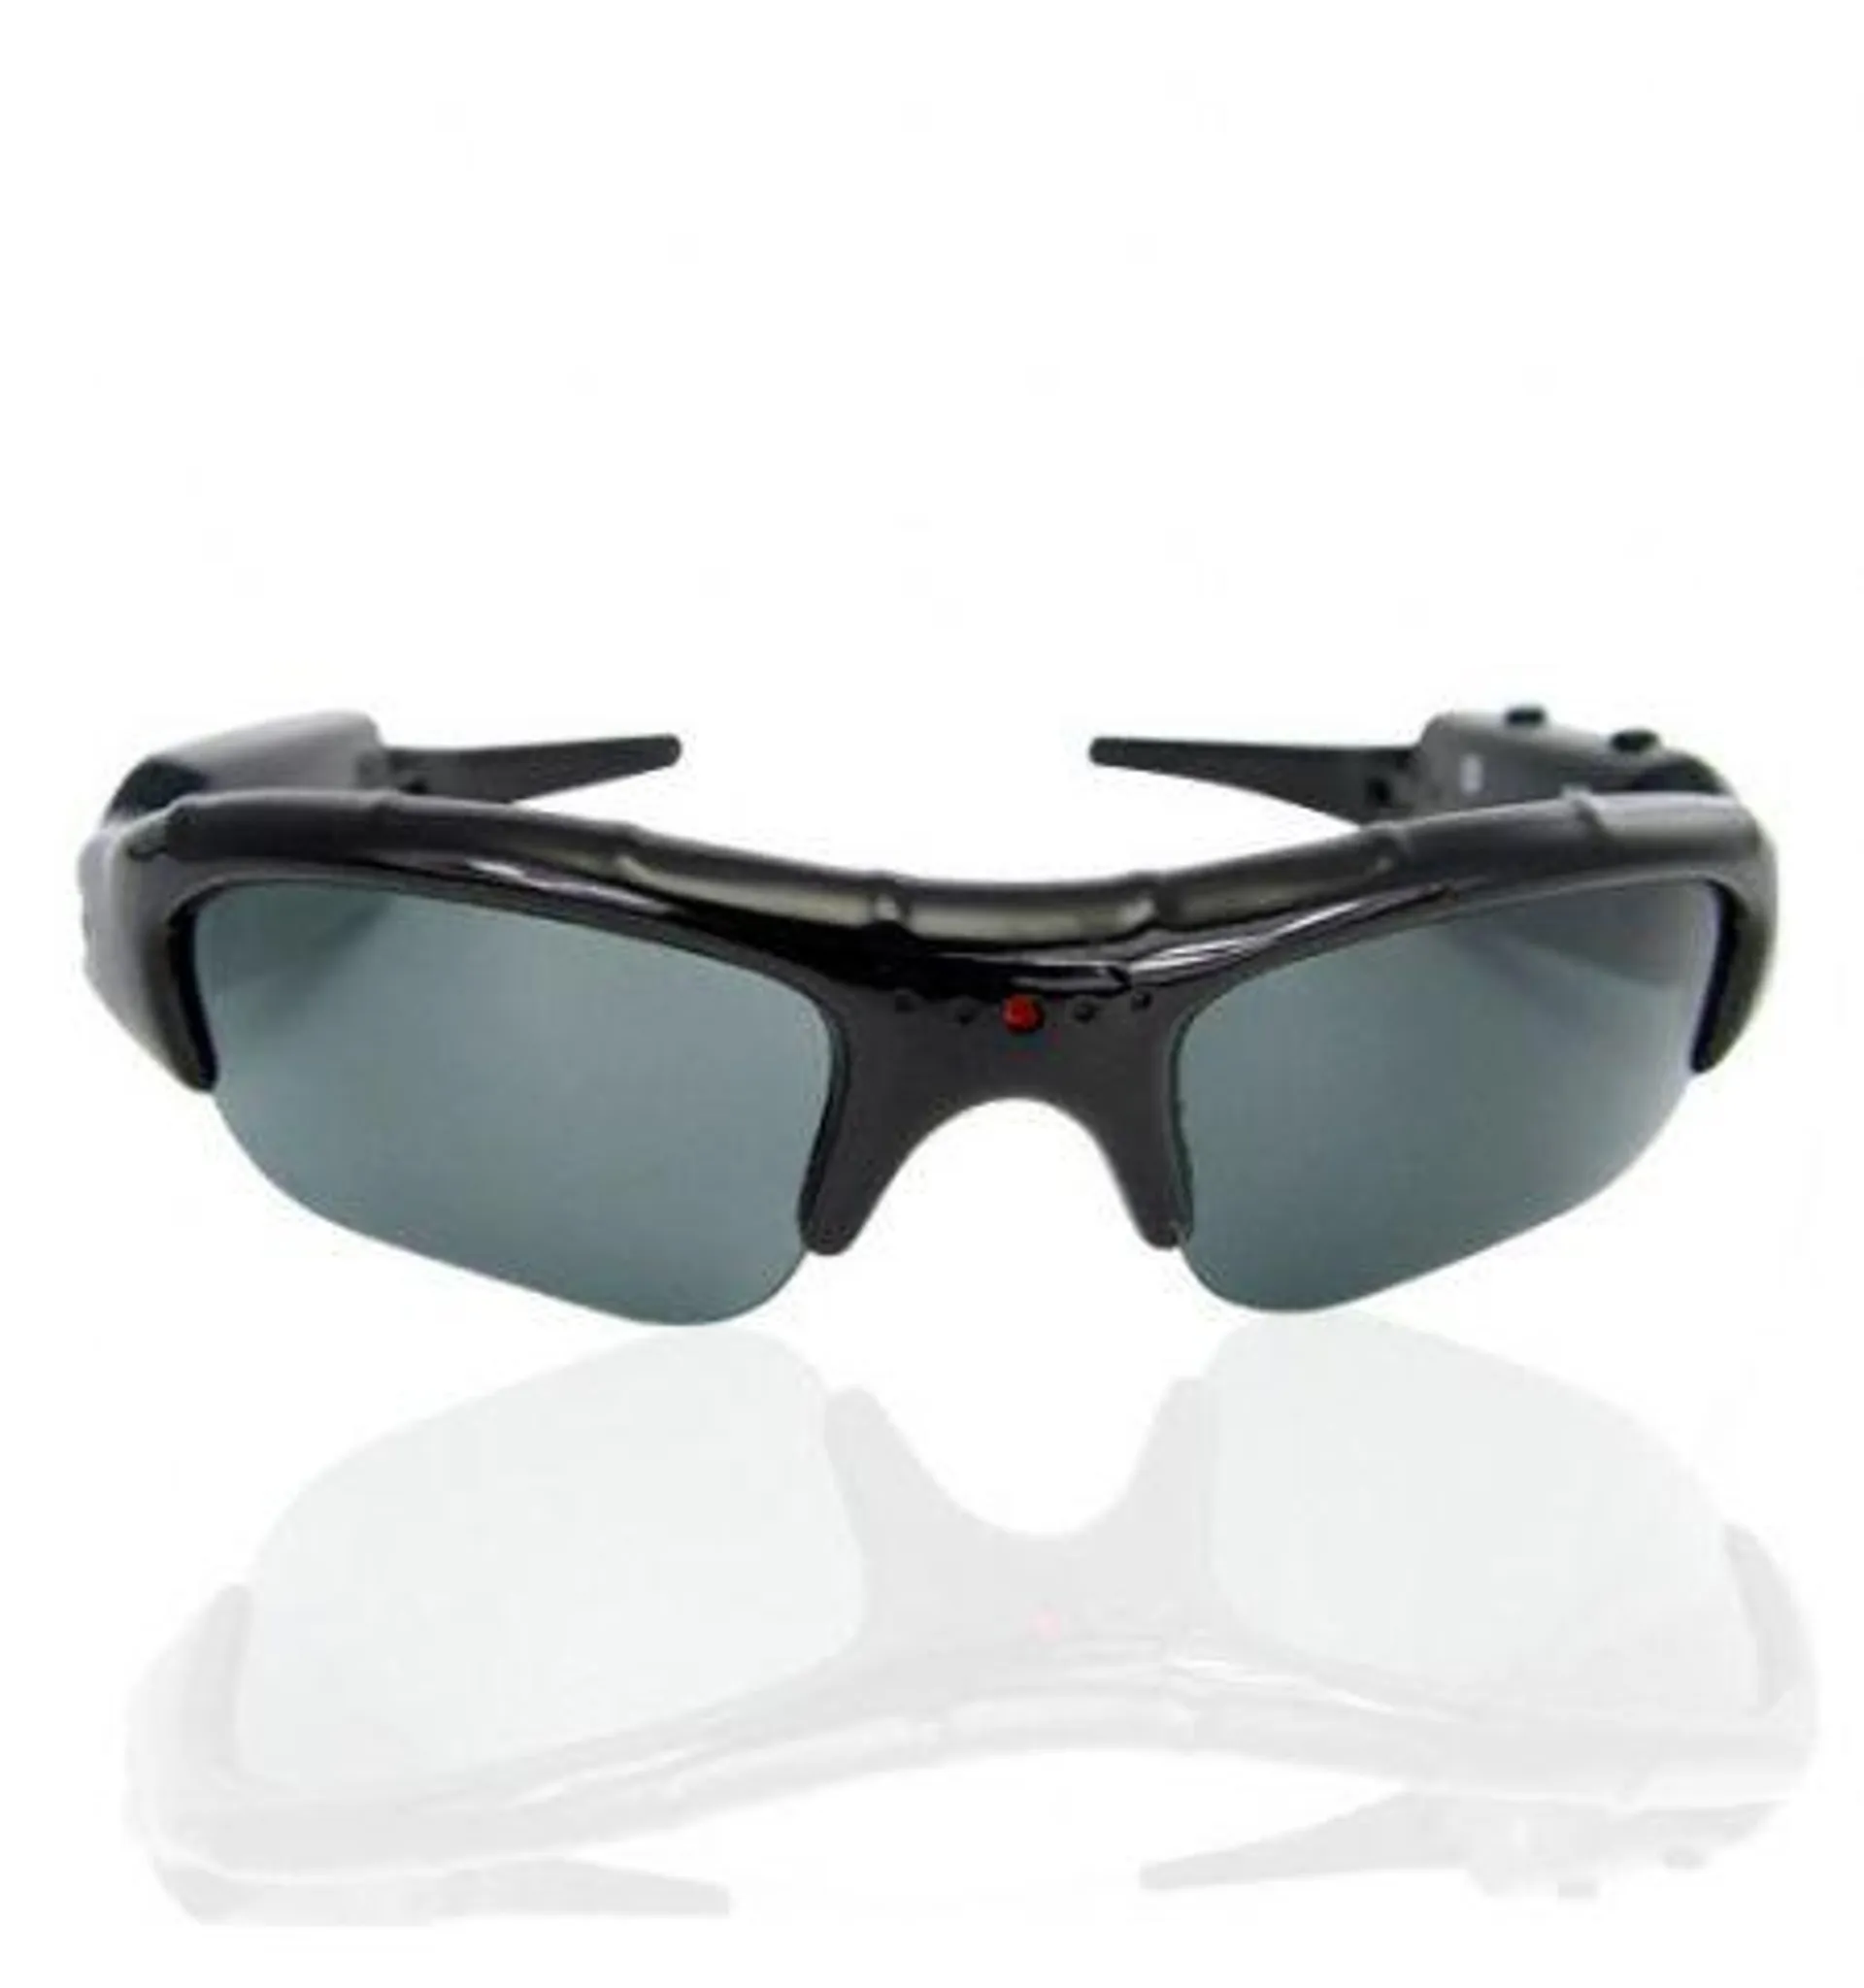 Digital Video Spy Sunglasses